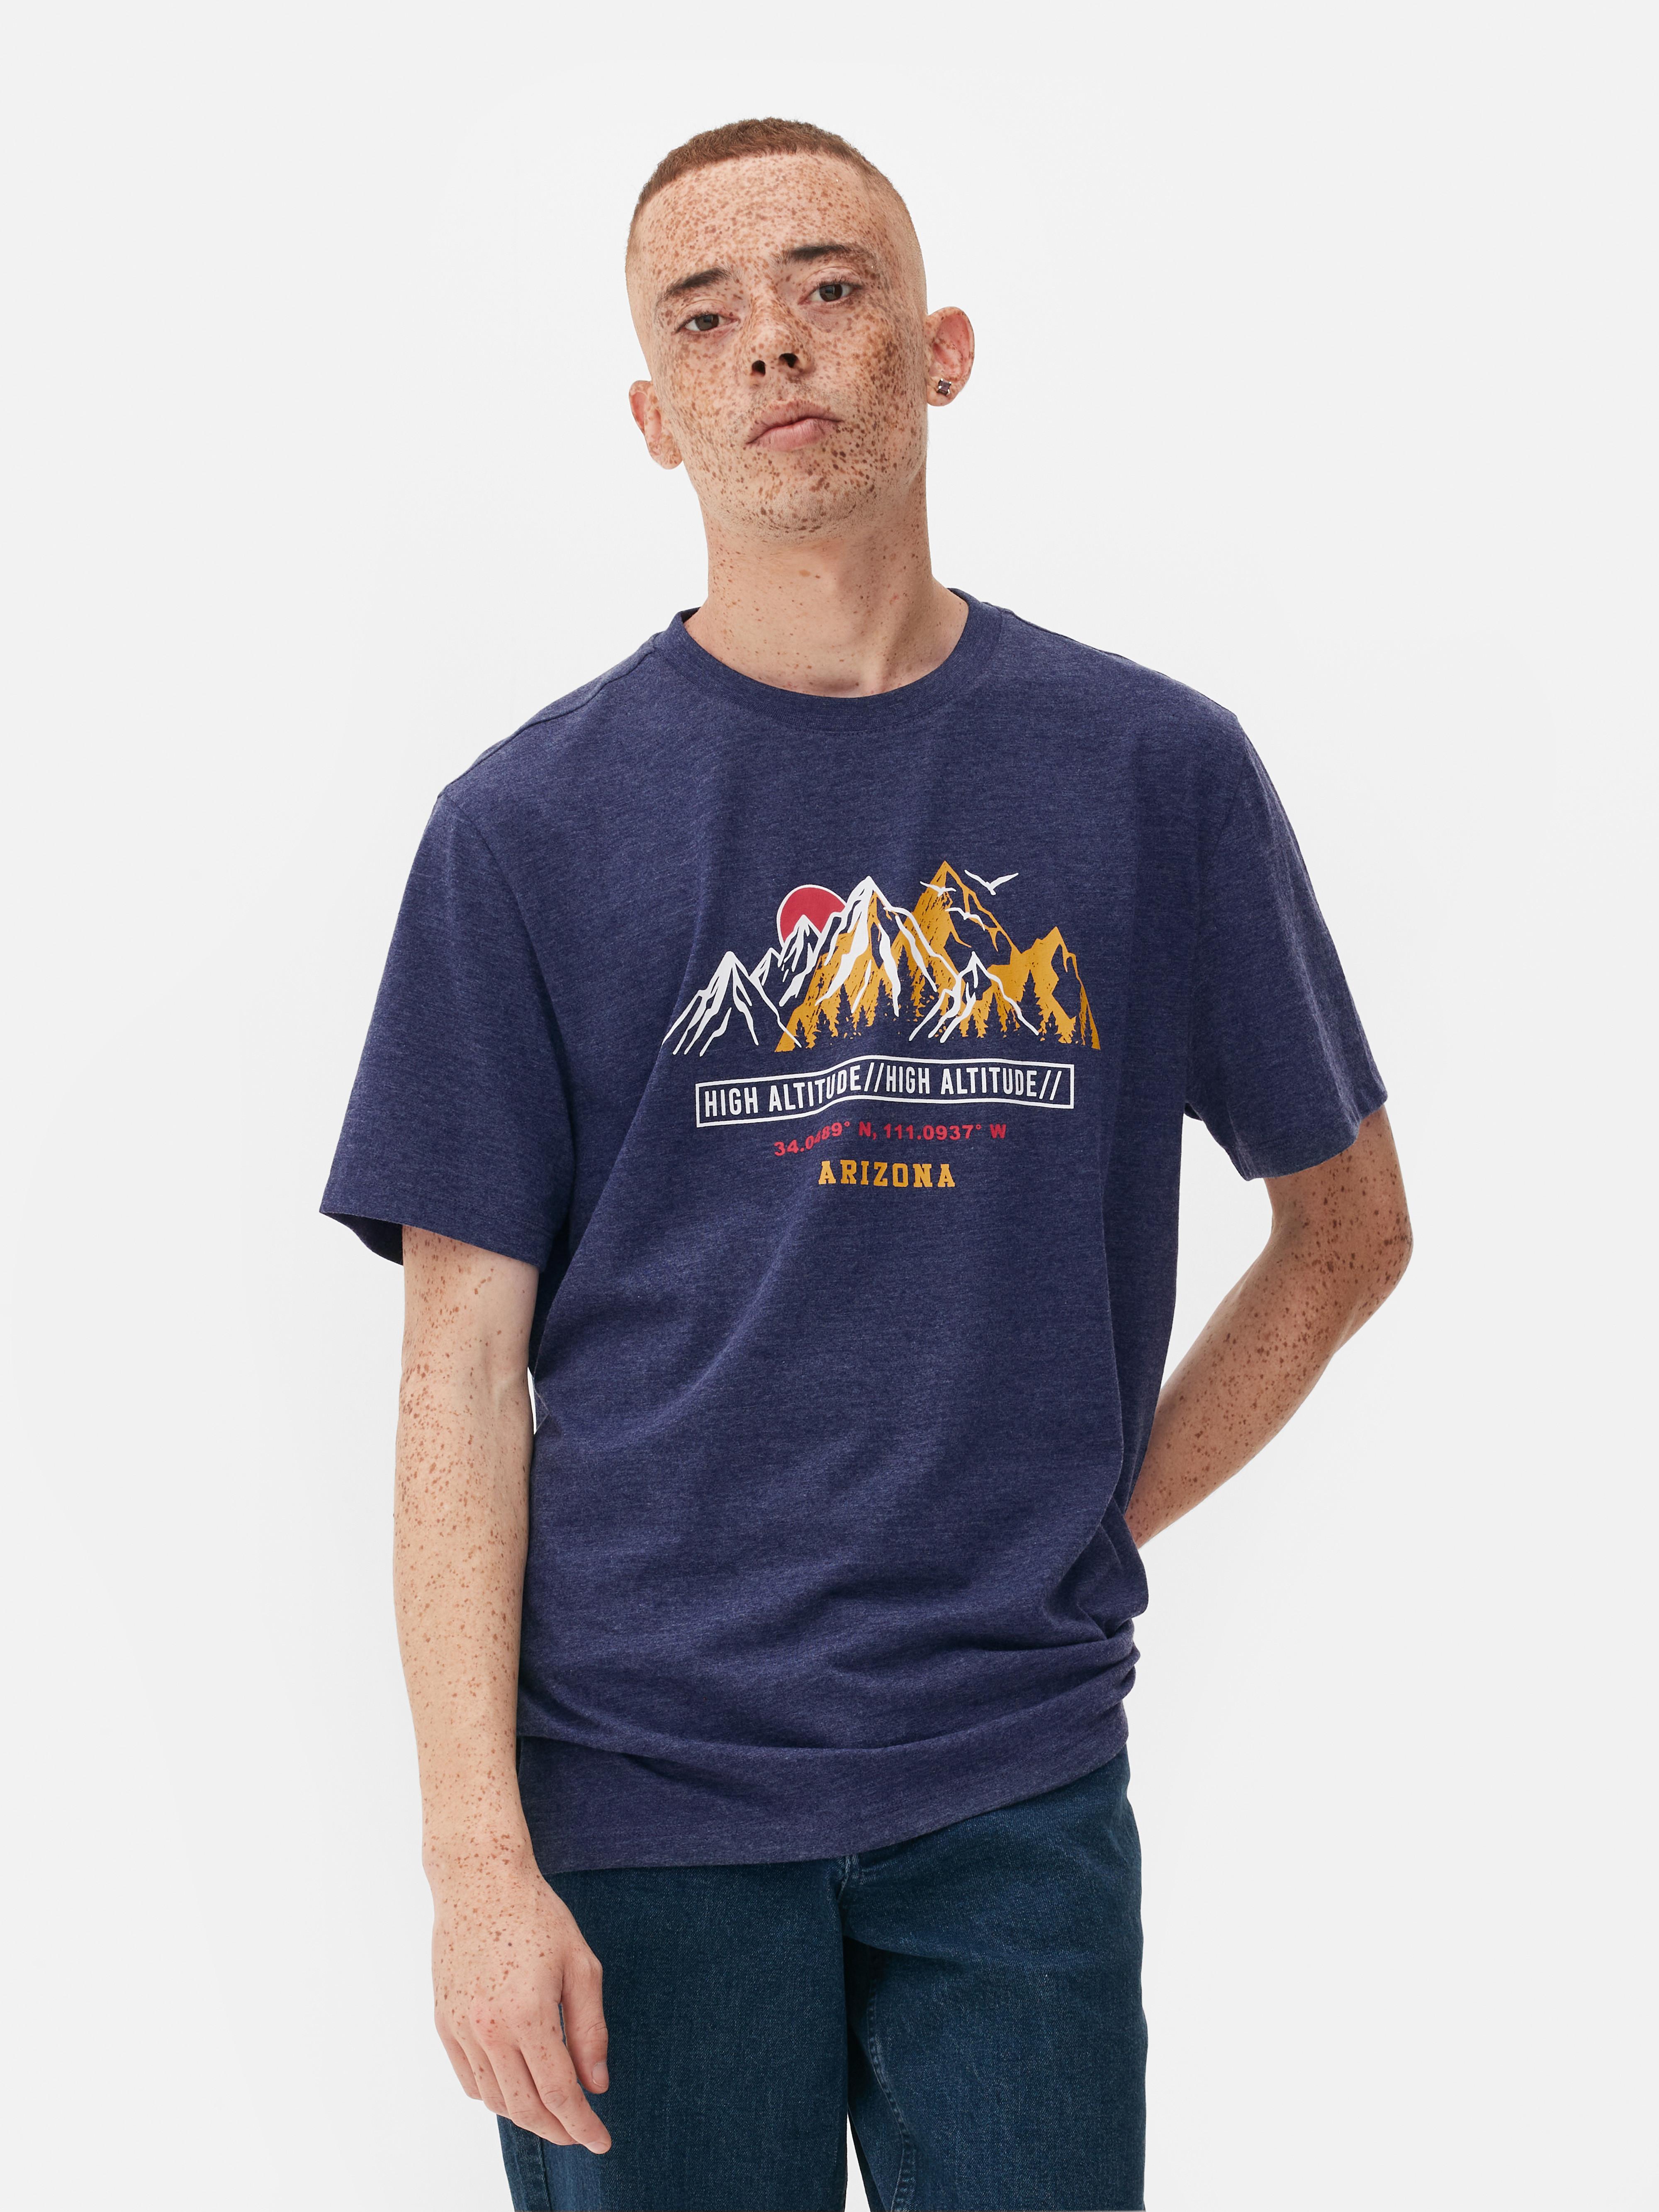 Arizona Printed T-Shirt | Primark